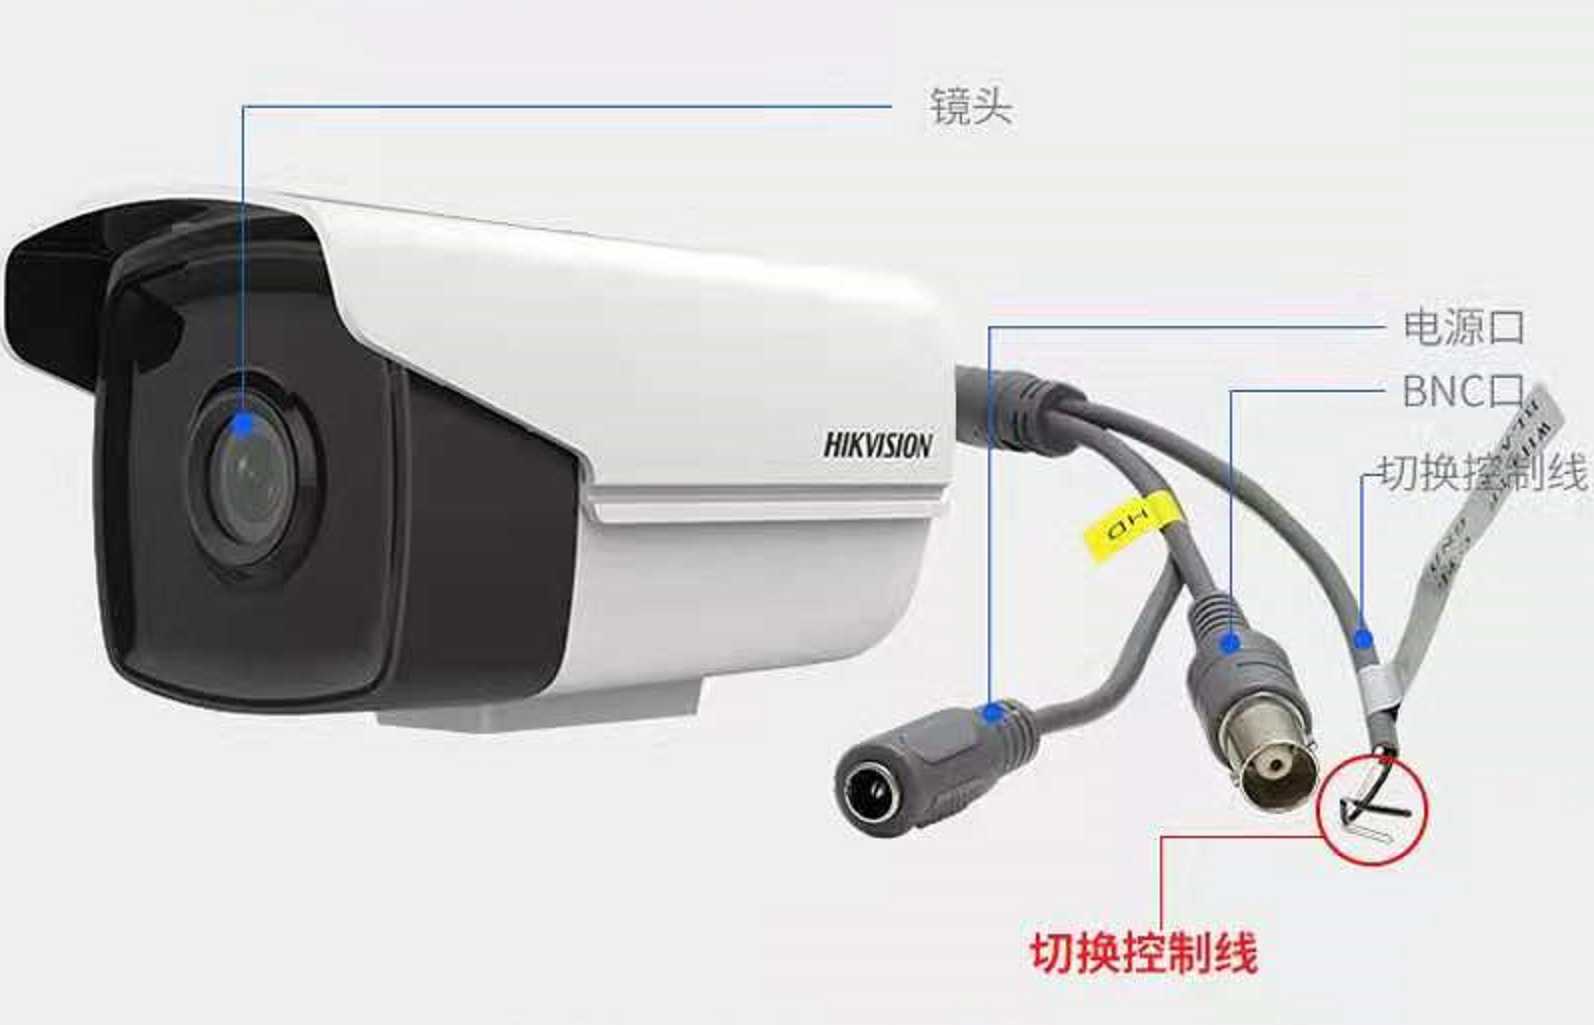 IP Security Camera - WiFi - Bullet - 1080P - 2.8mm - 659883